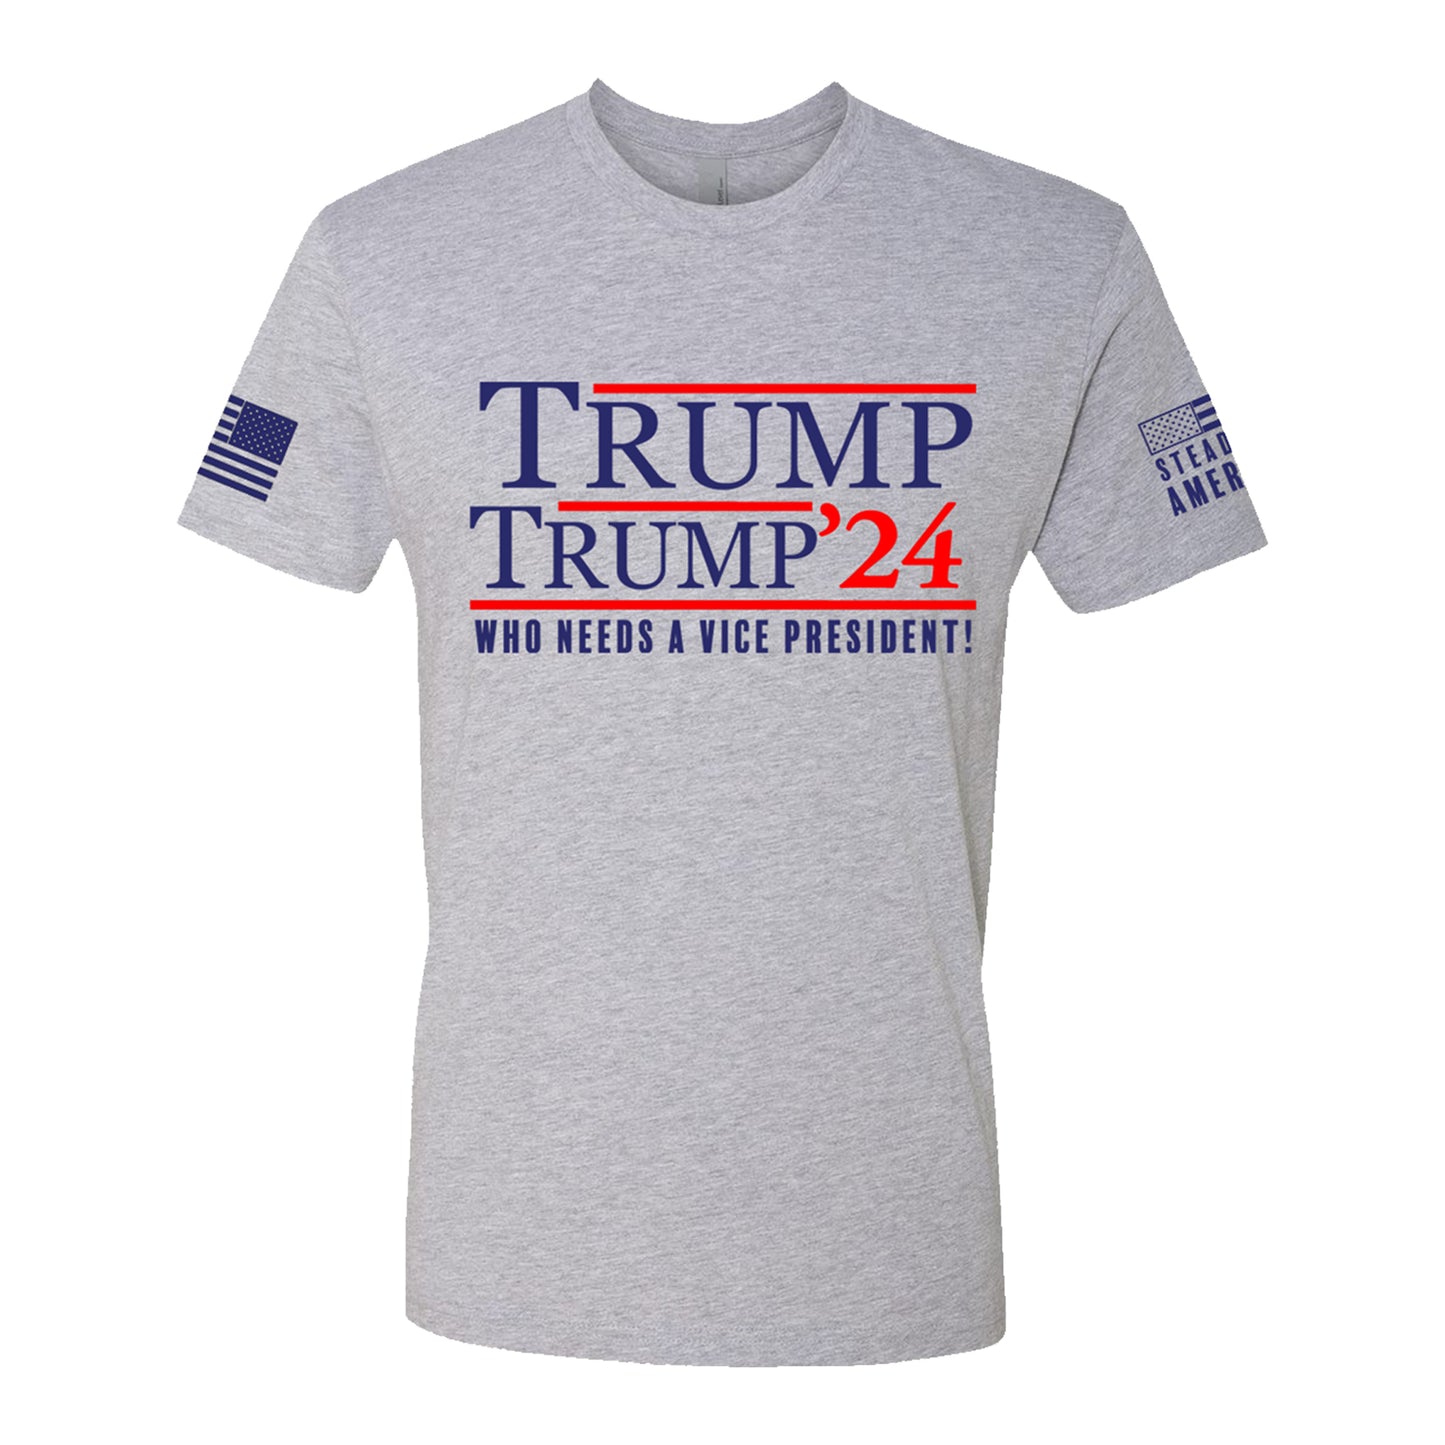 Trump / Trump '24 - Who Needs A Vice President!, Short Sleeve